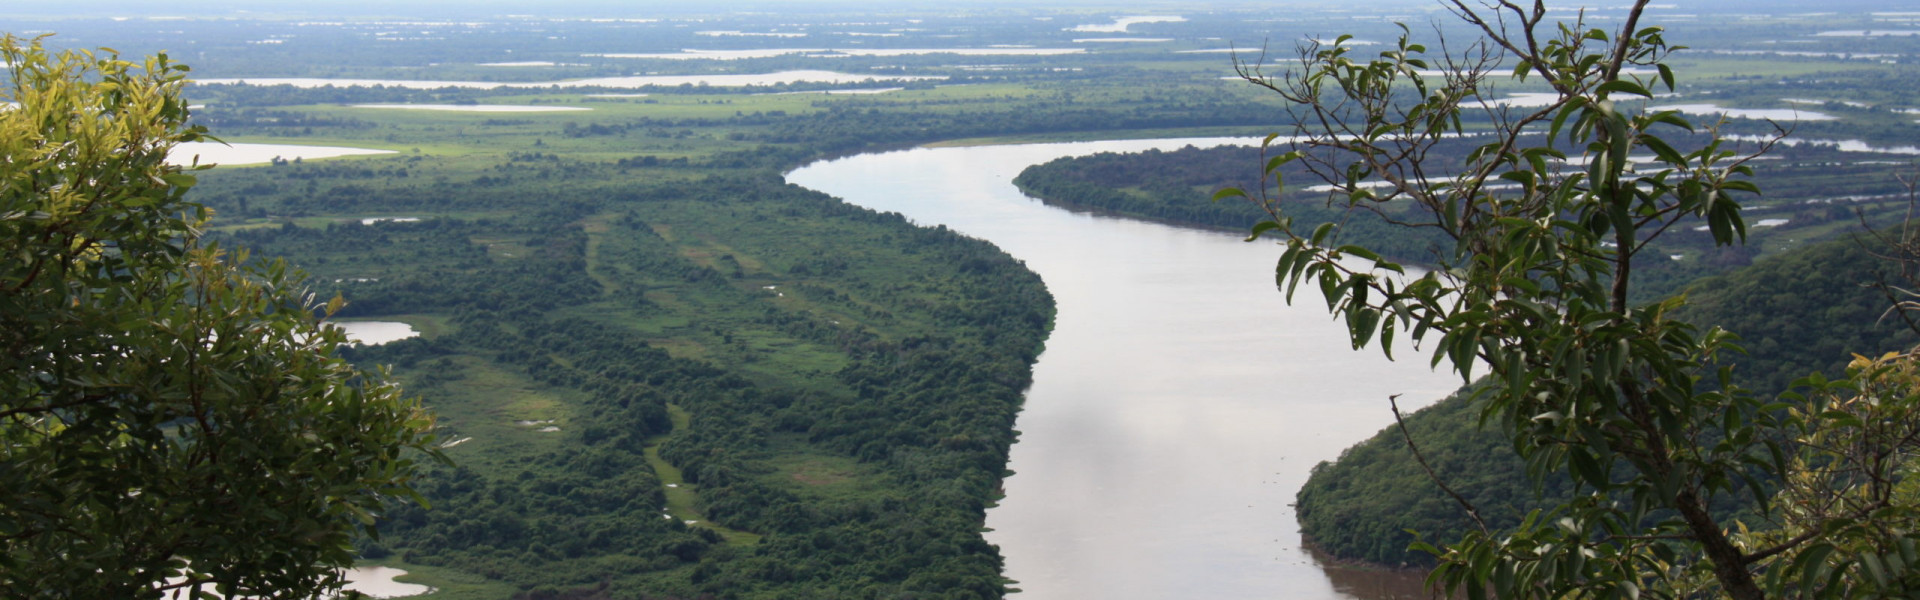 Projeto promete fomentar turismo de pesca esportiva no Mato Grosso